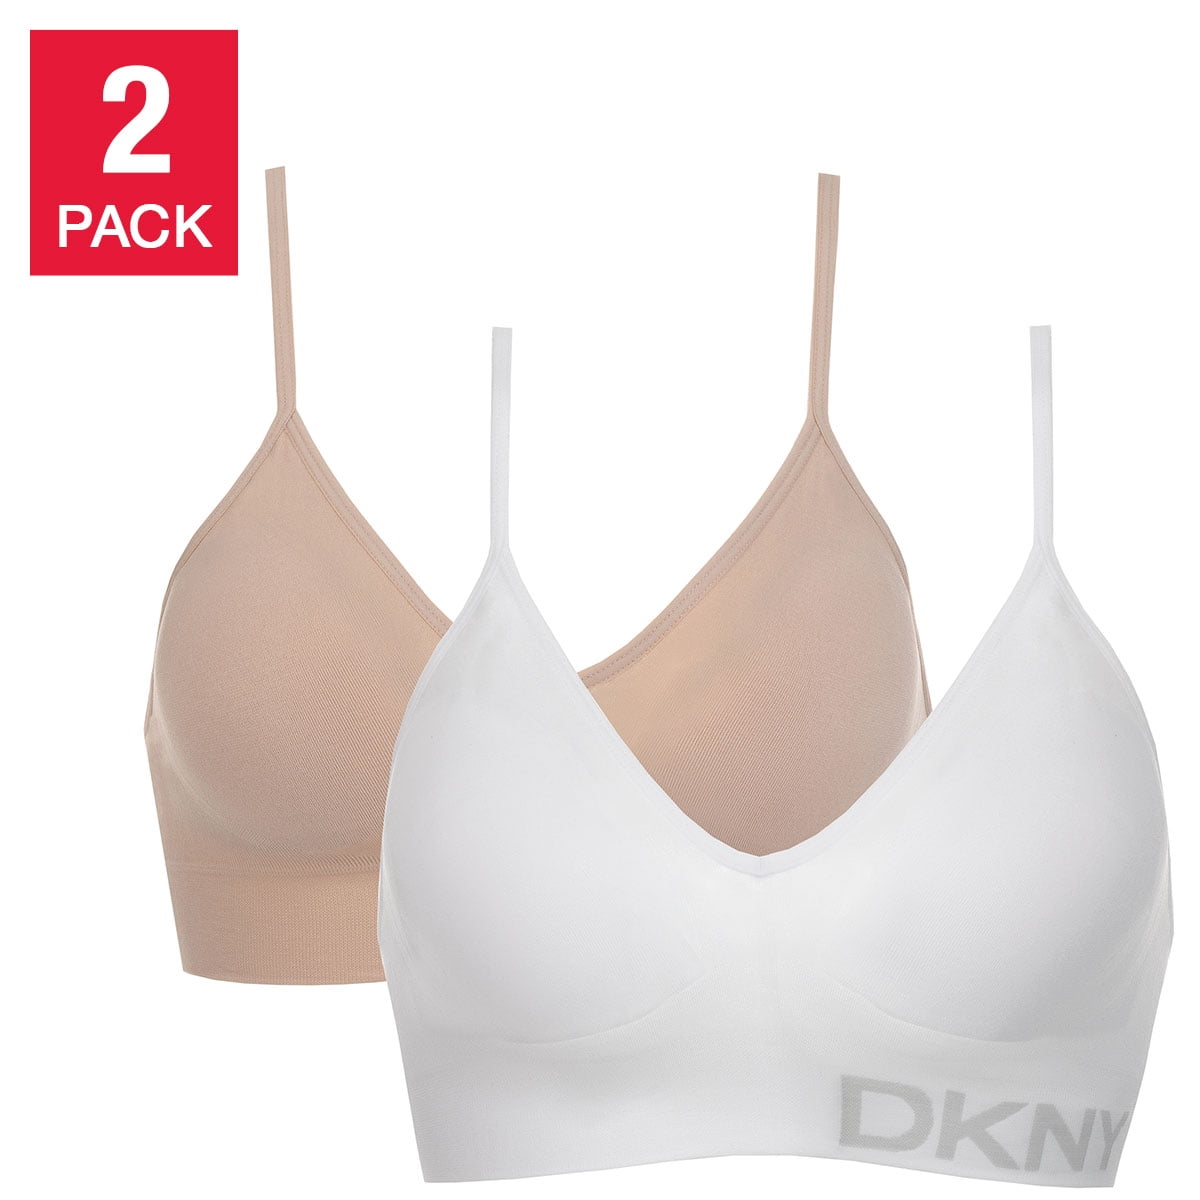 4 Pack DKNY Girls Nylon/Spandex Seamless Training Sports Bra with Removable Pad 